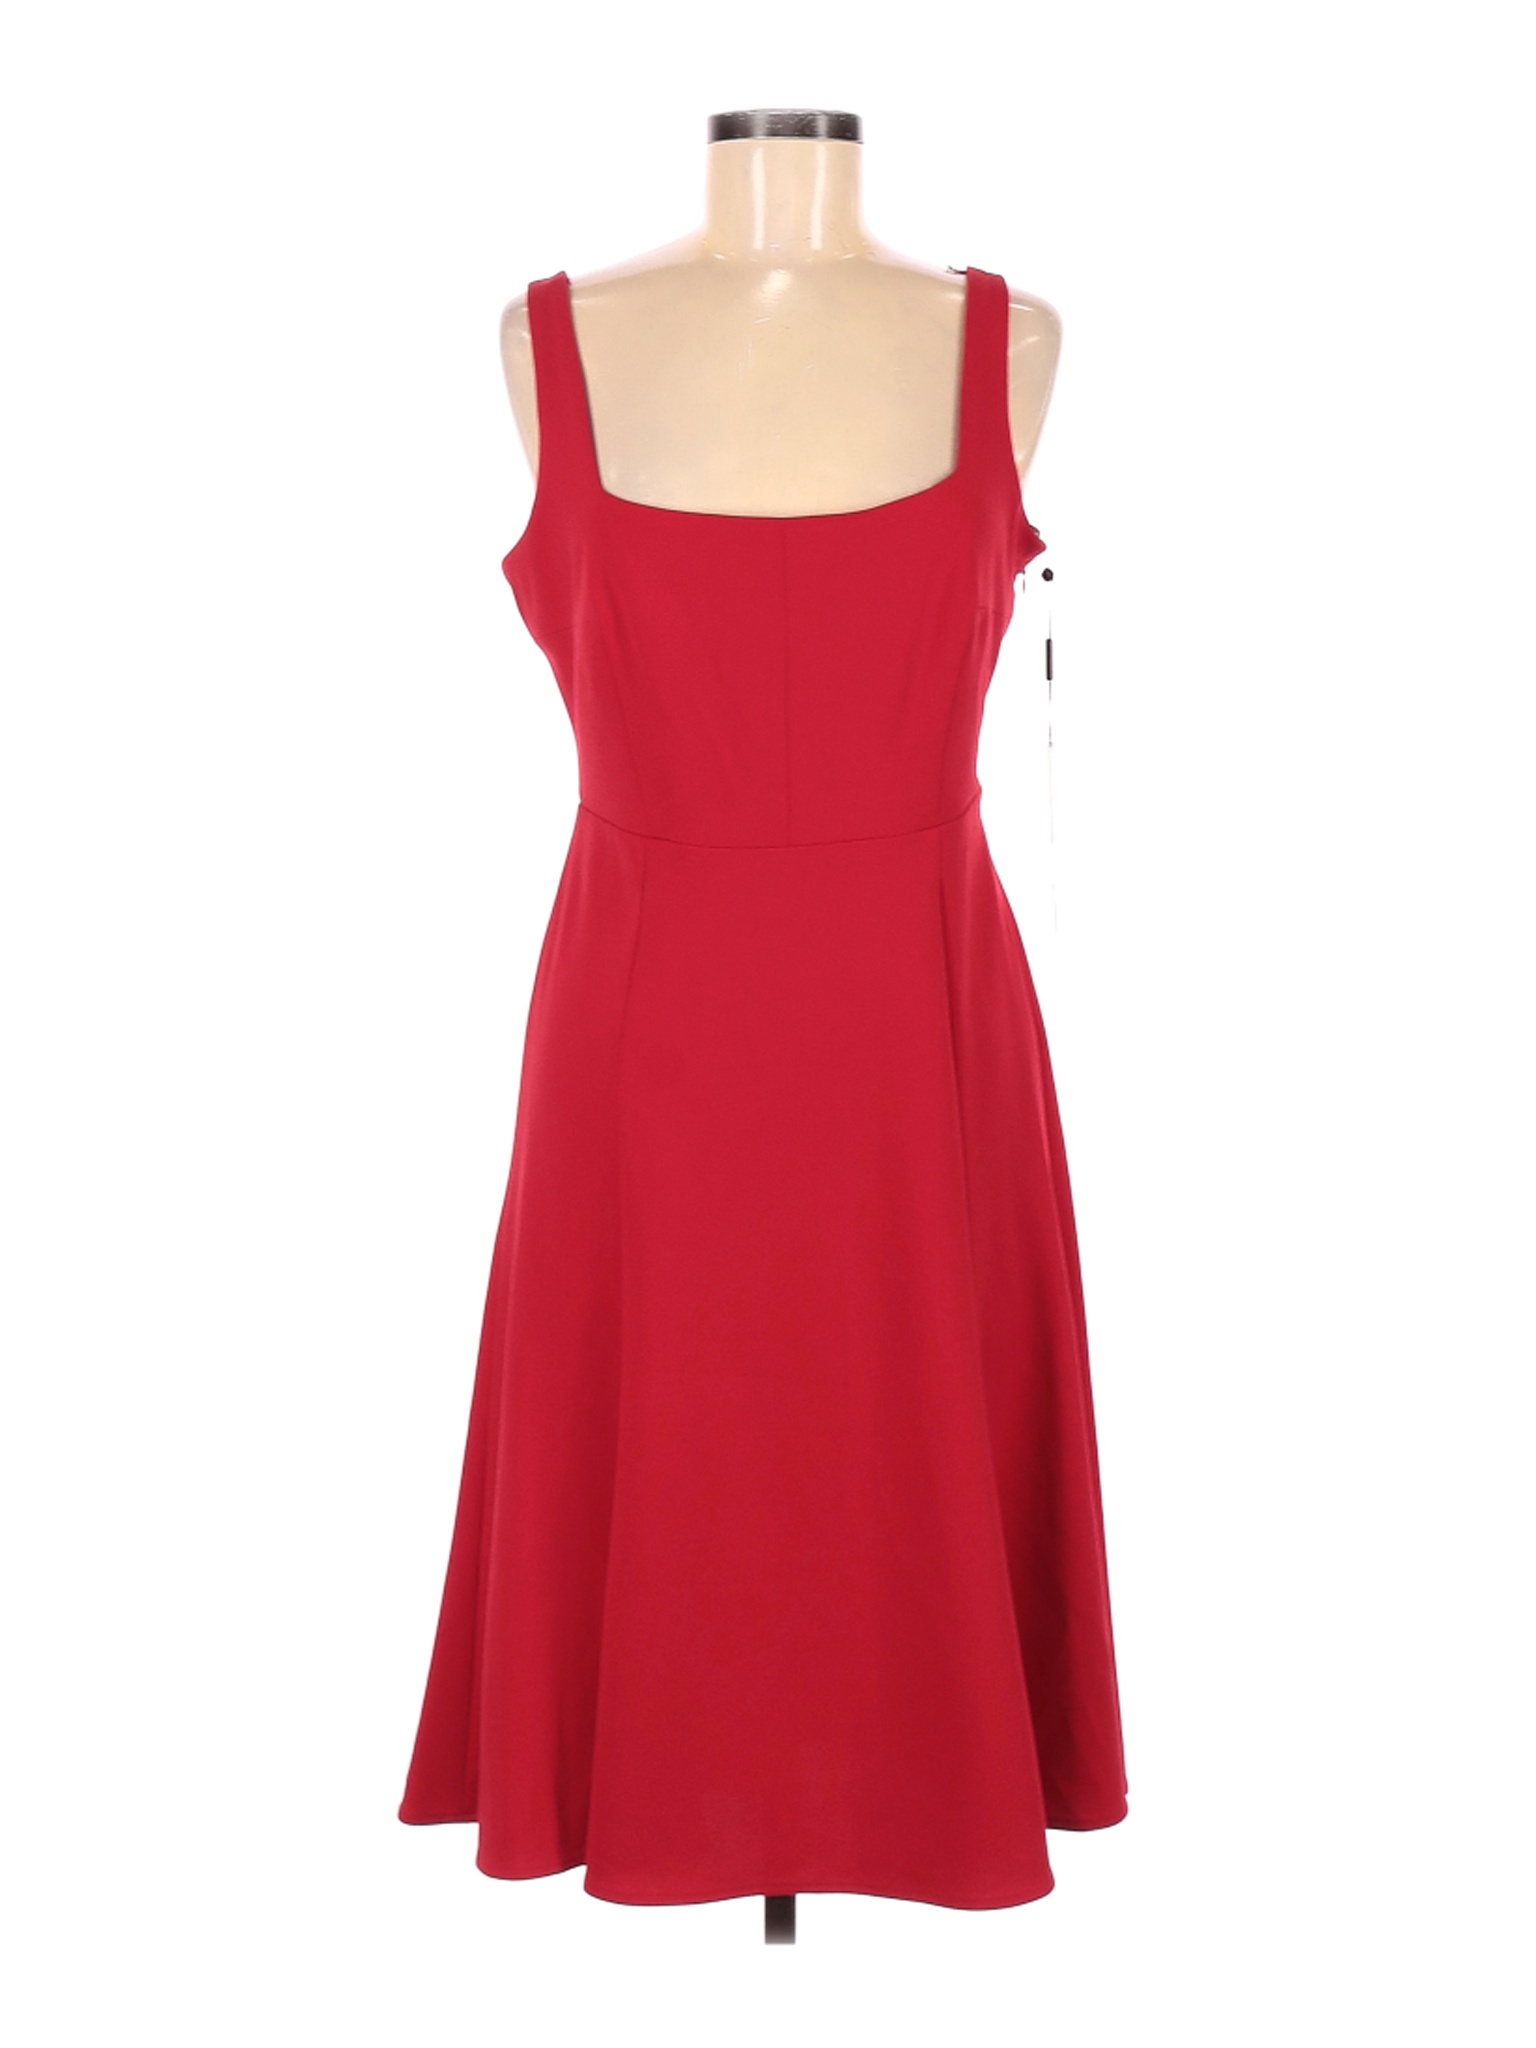 NWT Calvin Klein Women Red Casual Dress 6 | eBay